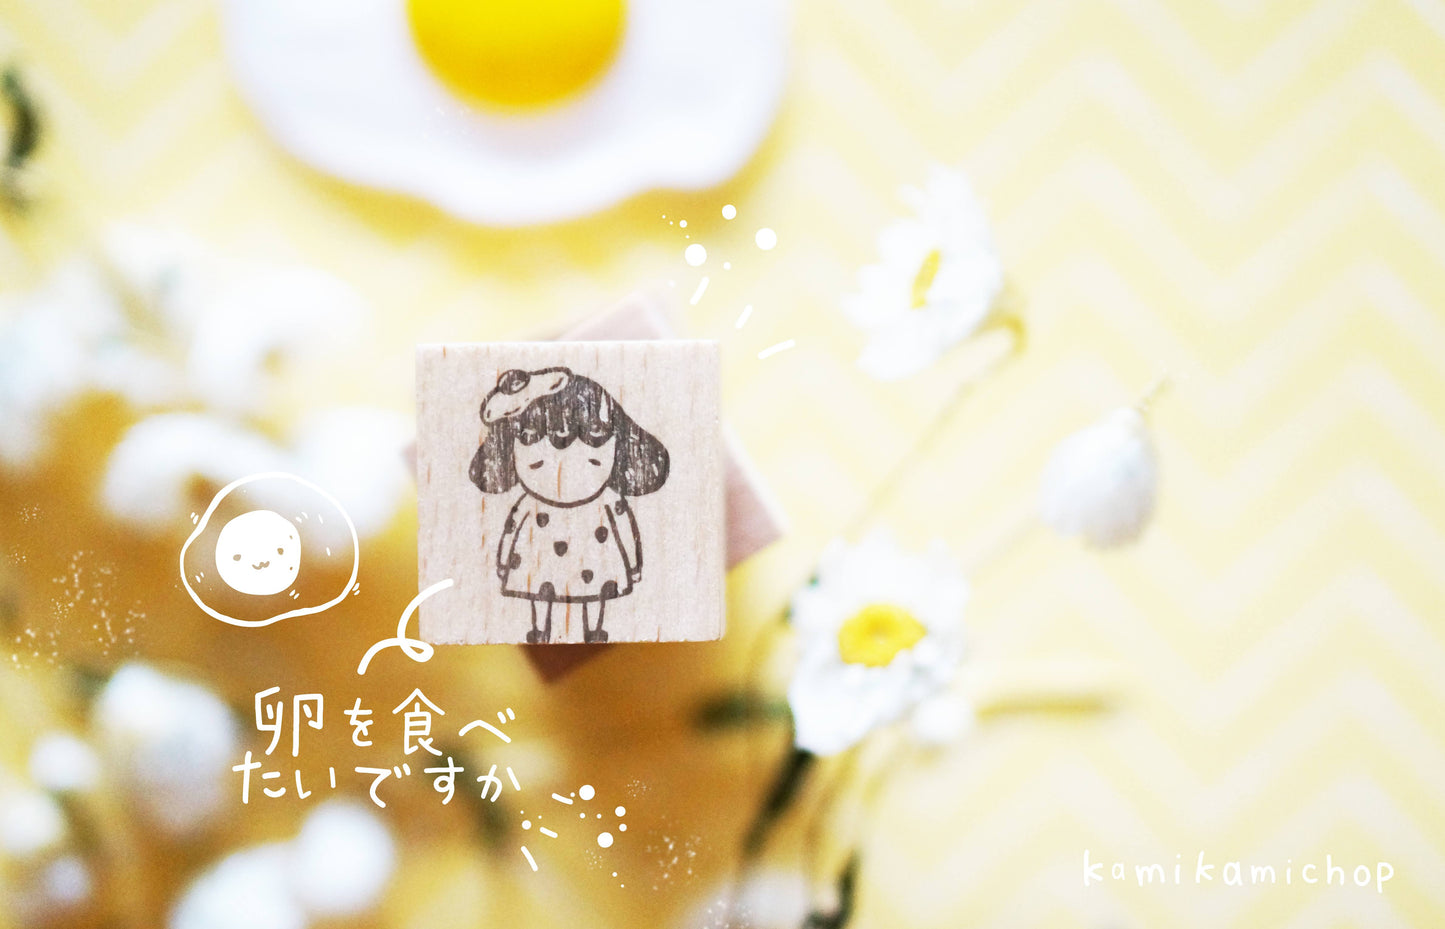 Kamikamichop Tamago (Girl) Rubber Stamp